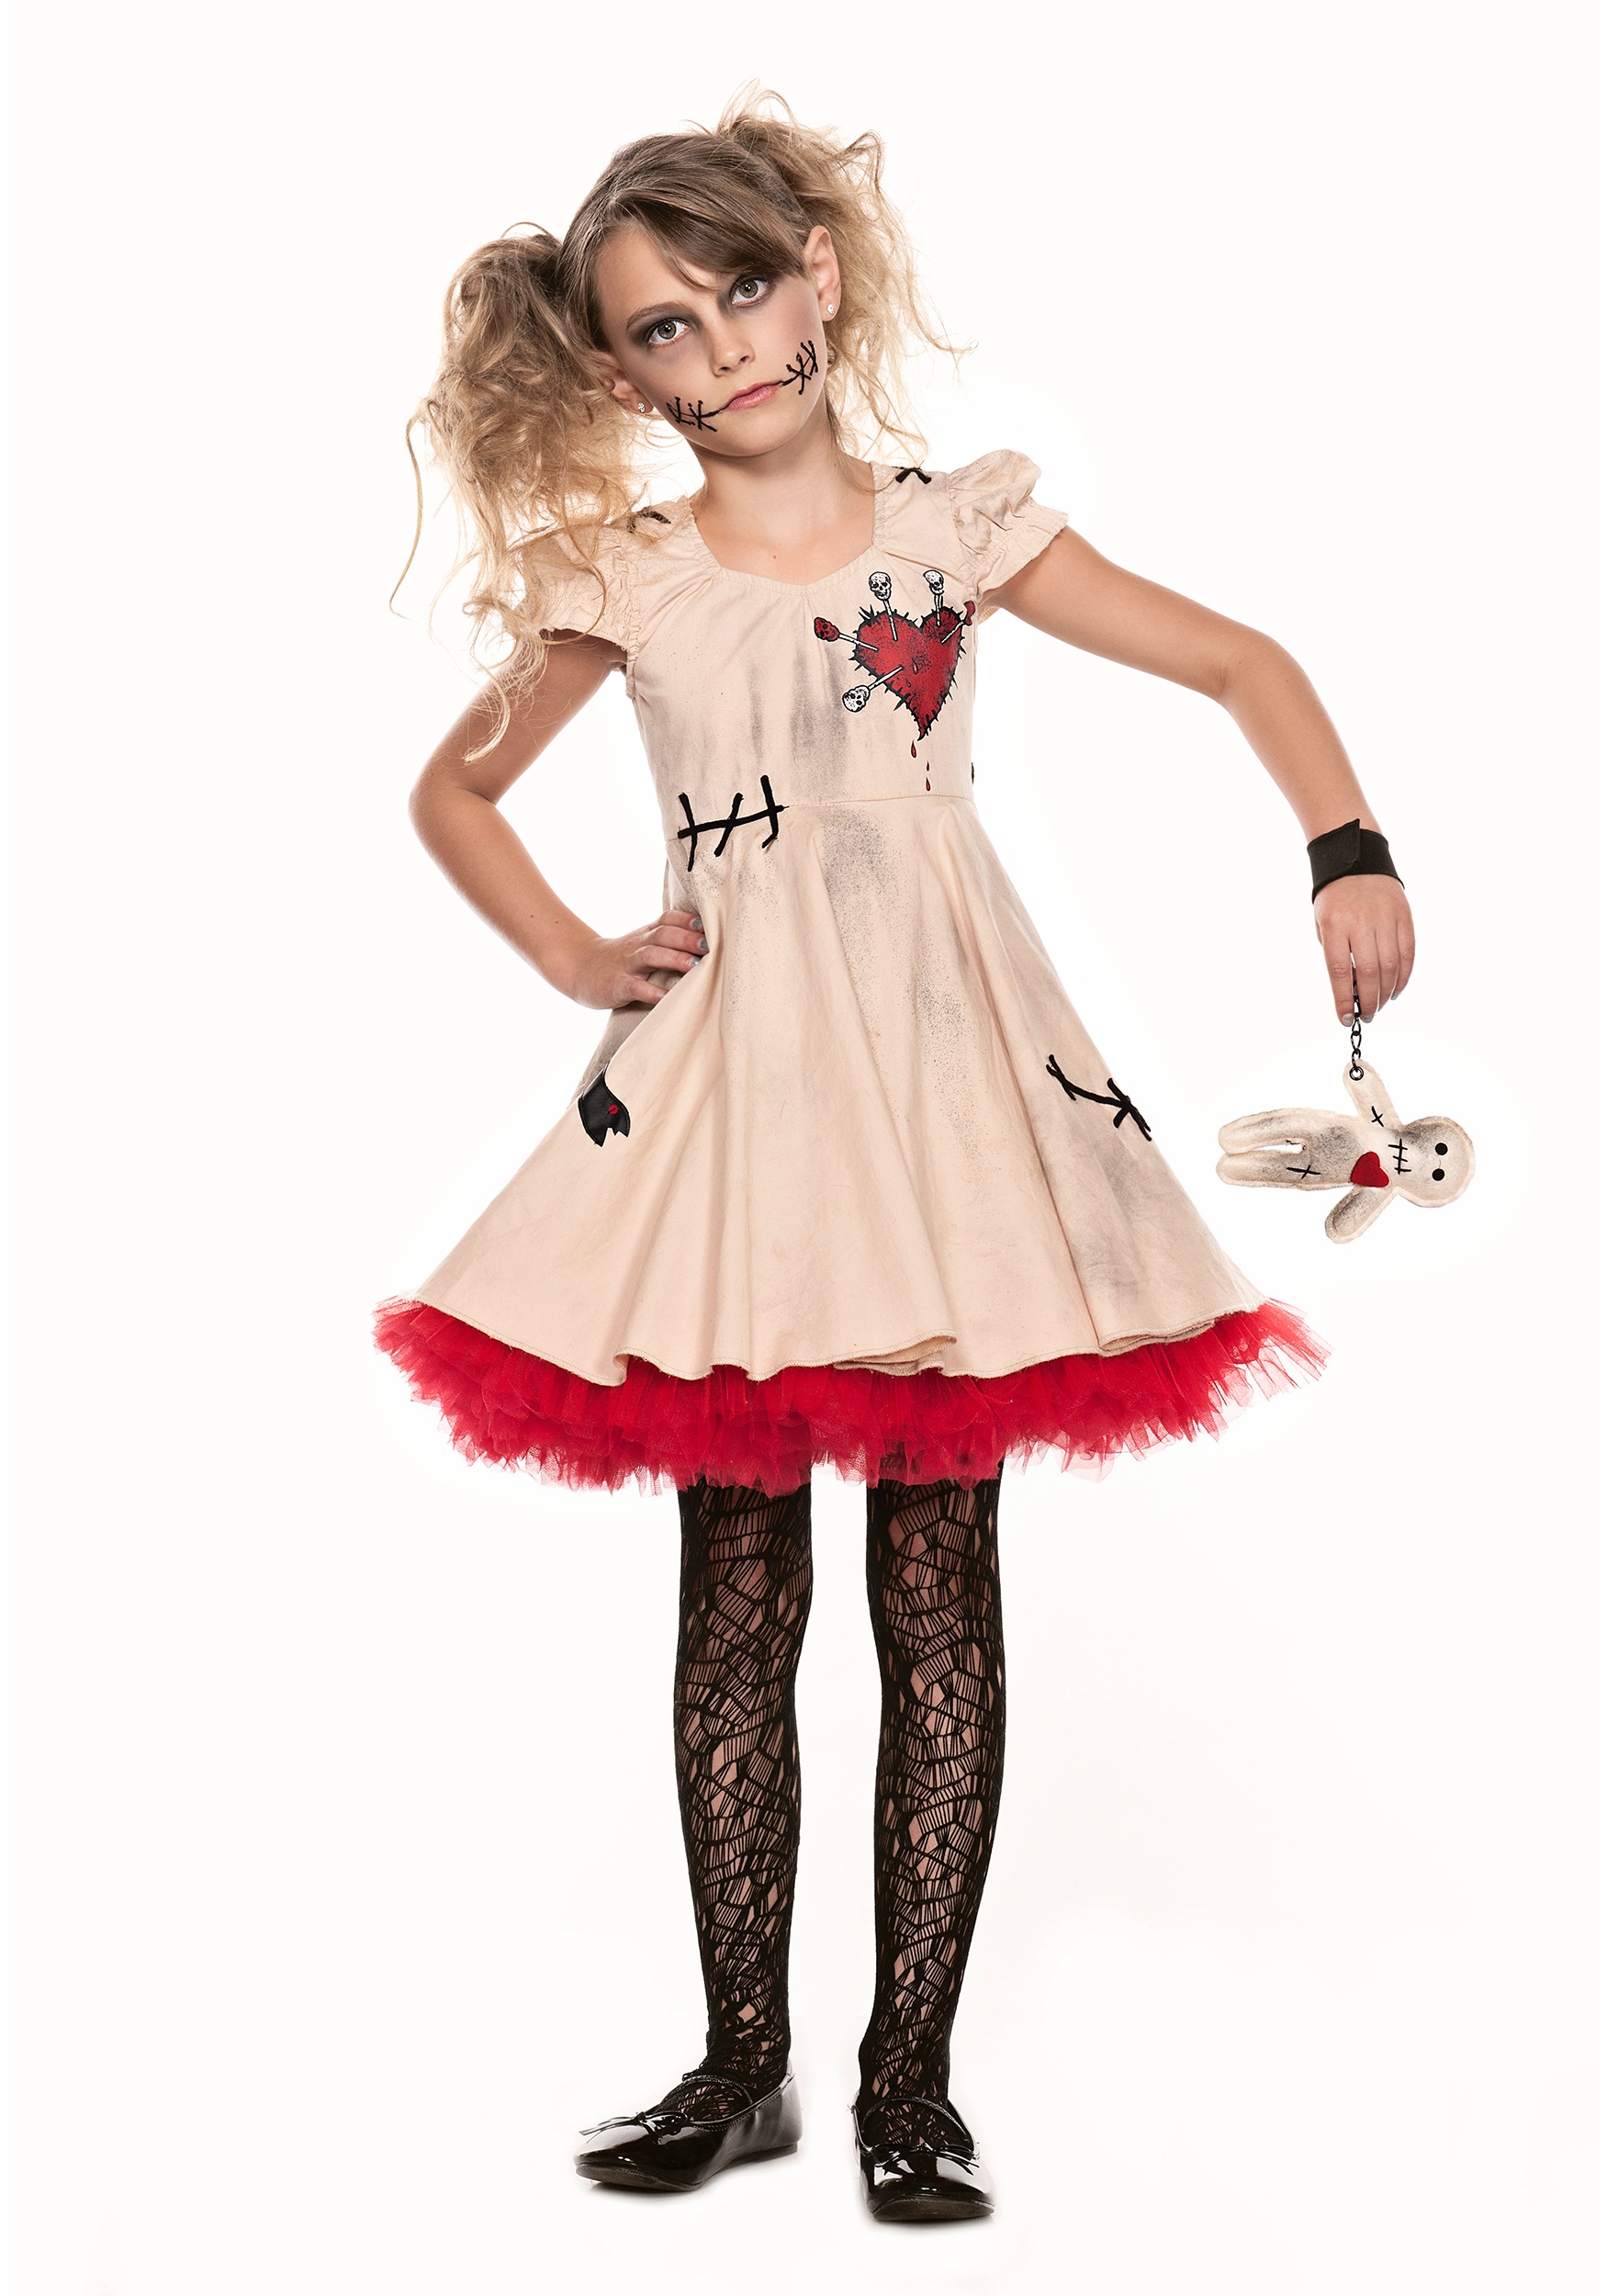 creepy doll costume girl